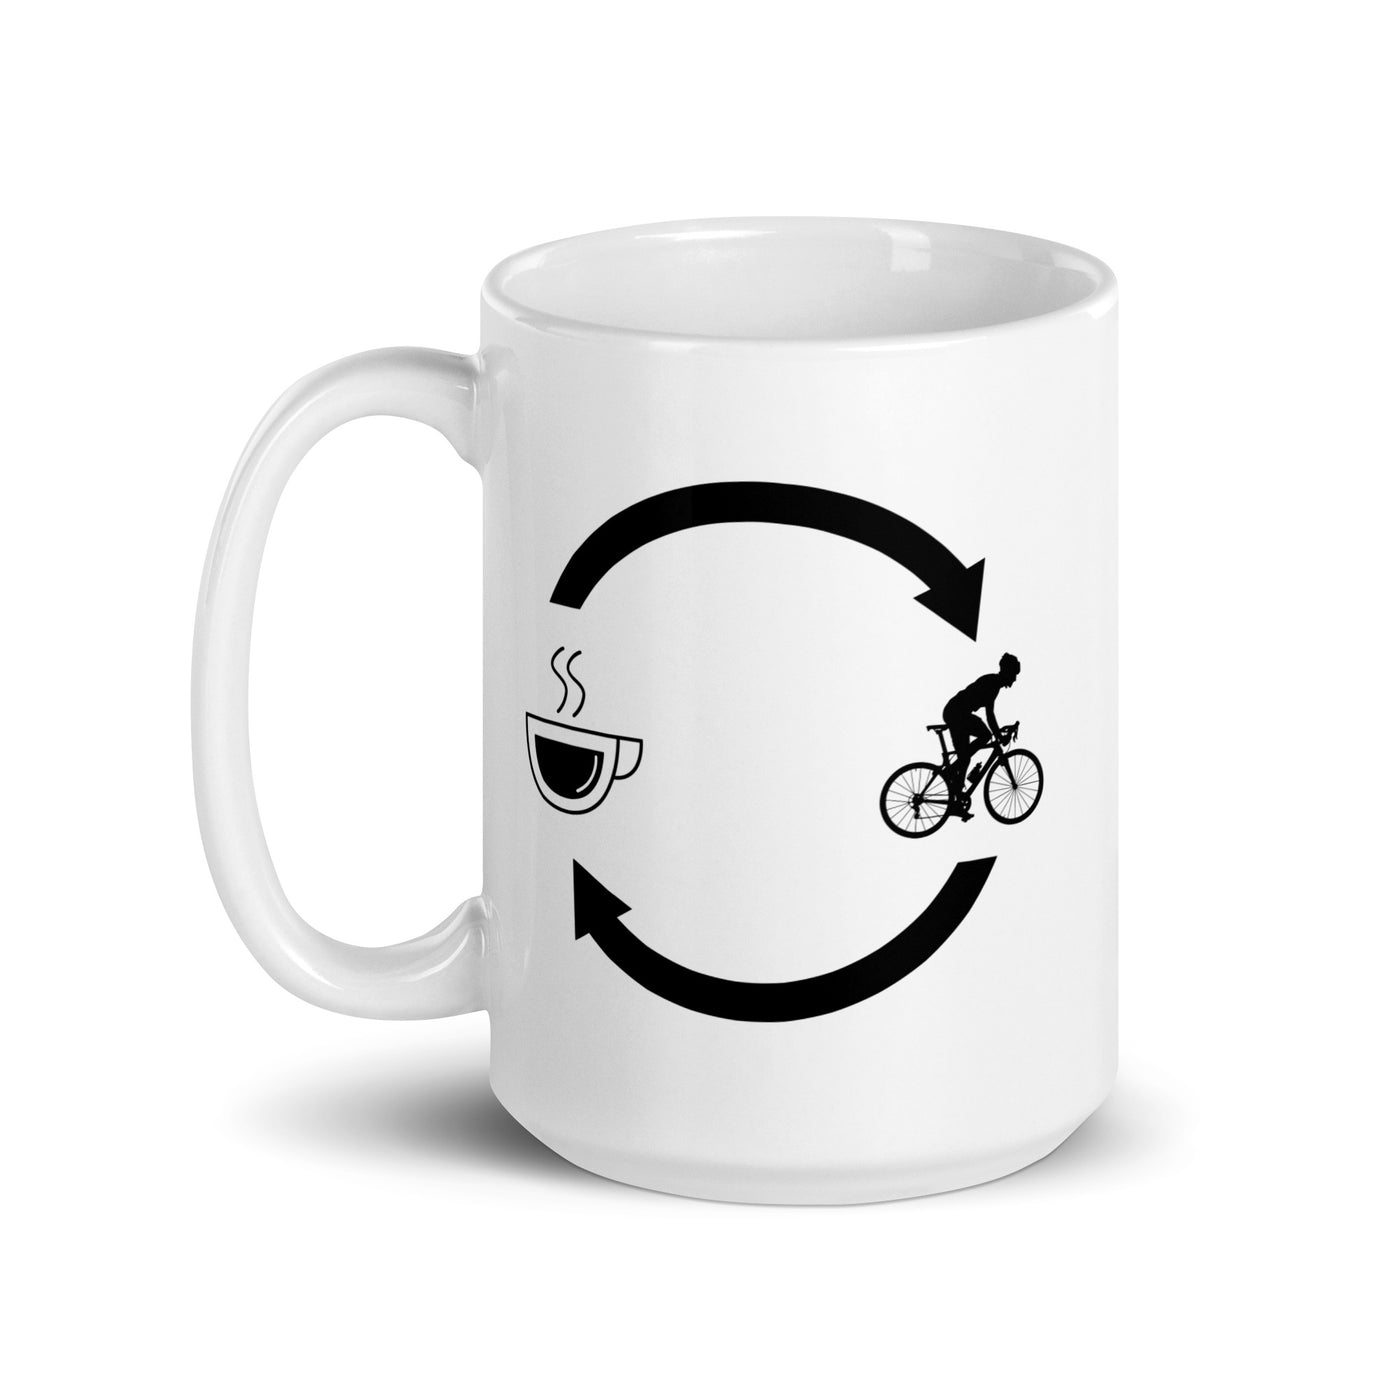 Coffee Loading Arrows And Cycling 1 - Tasse fahrrad